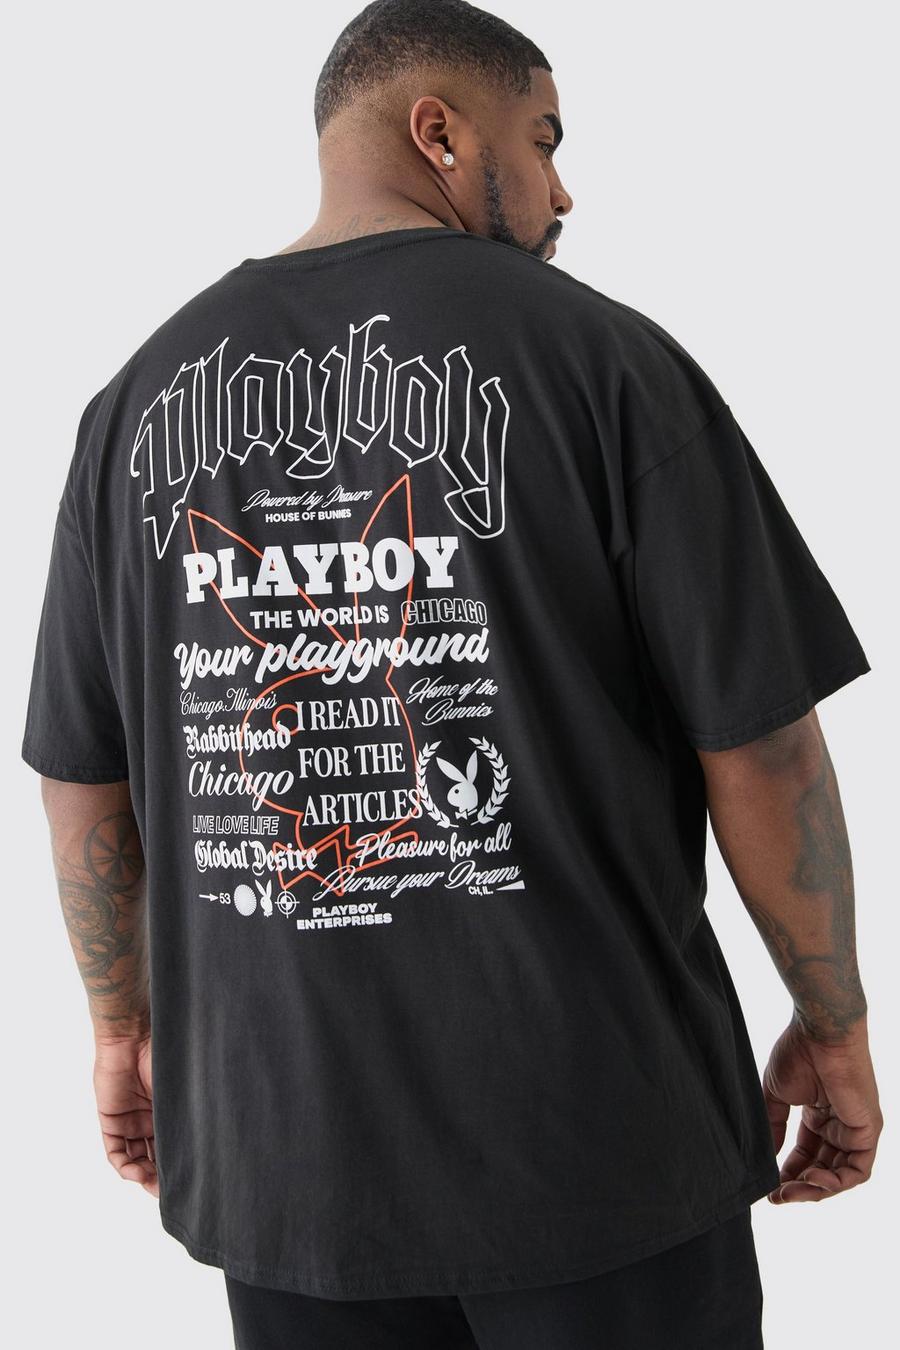 Plus schwarzes T-Shirt mit Playboy-Print, Black